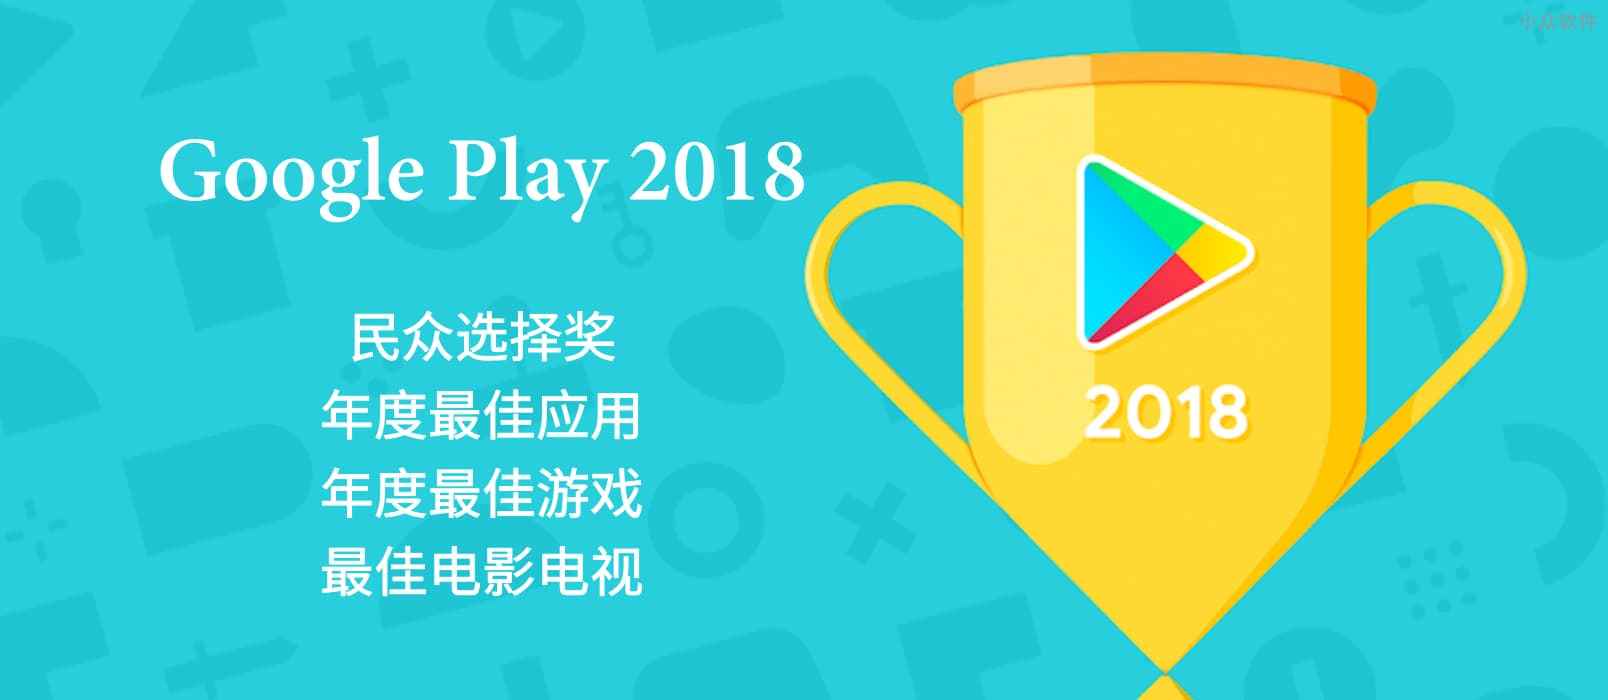 Google Play 的 2018 年最佳应用、最佳游戏、最佳电影等榜单发布